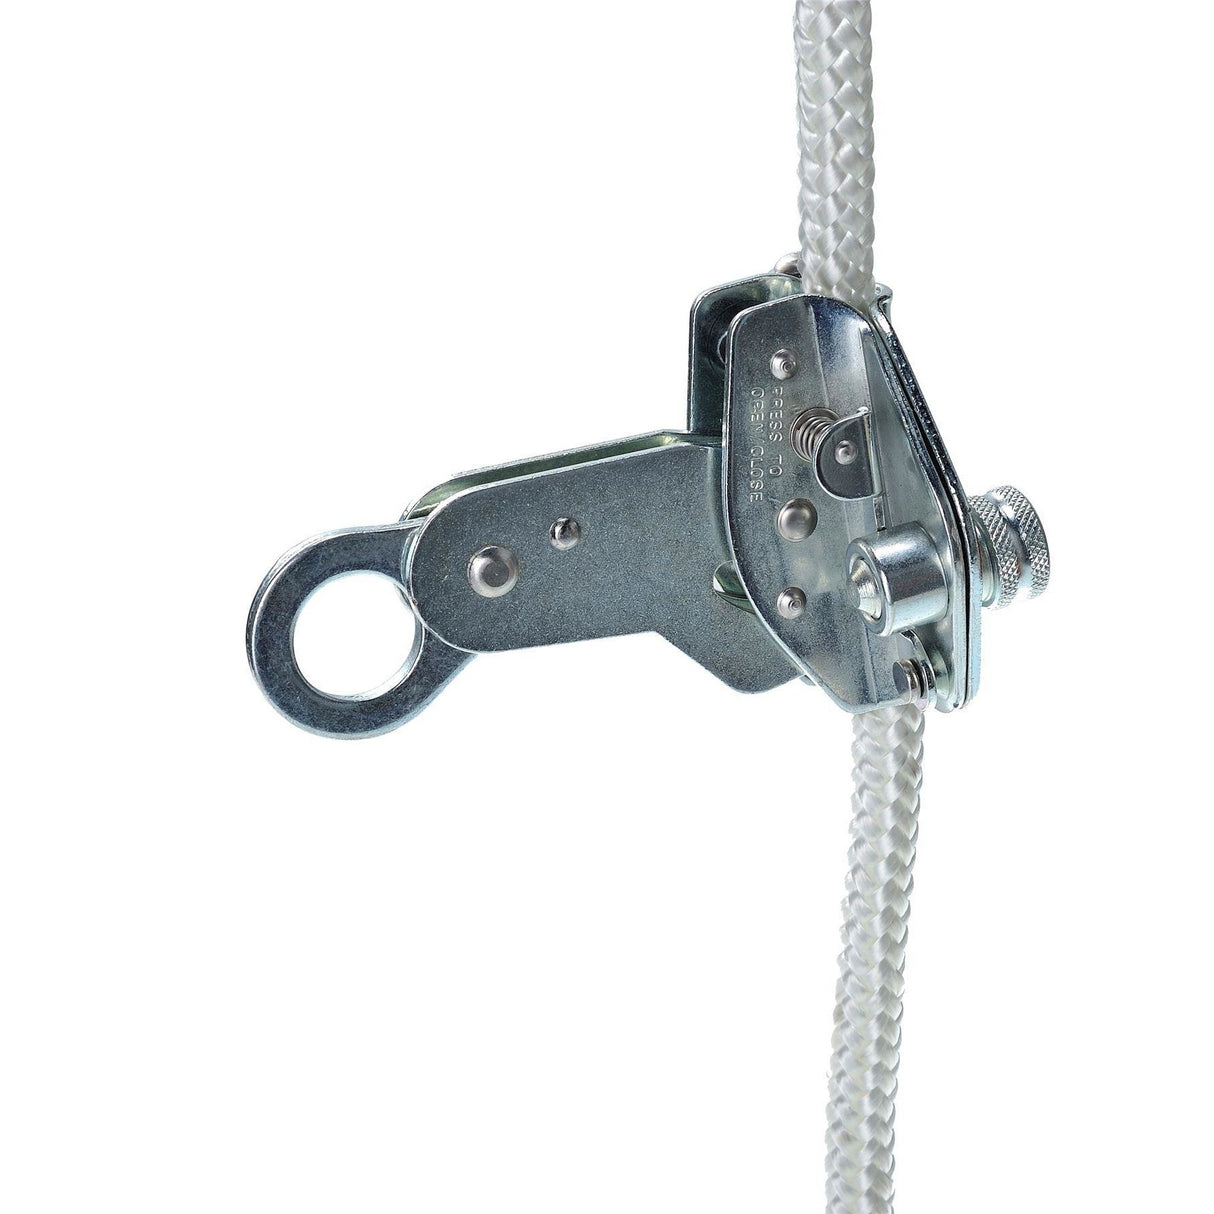 Portwest 12mm Detachable Rope Grab